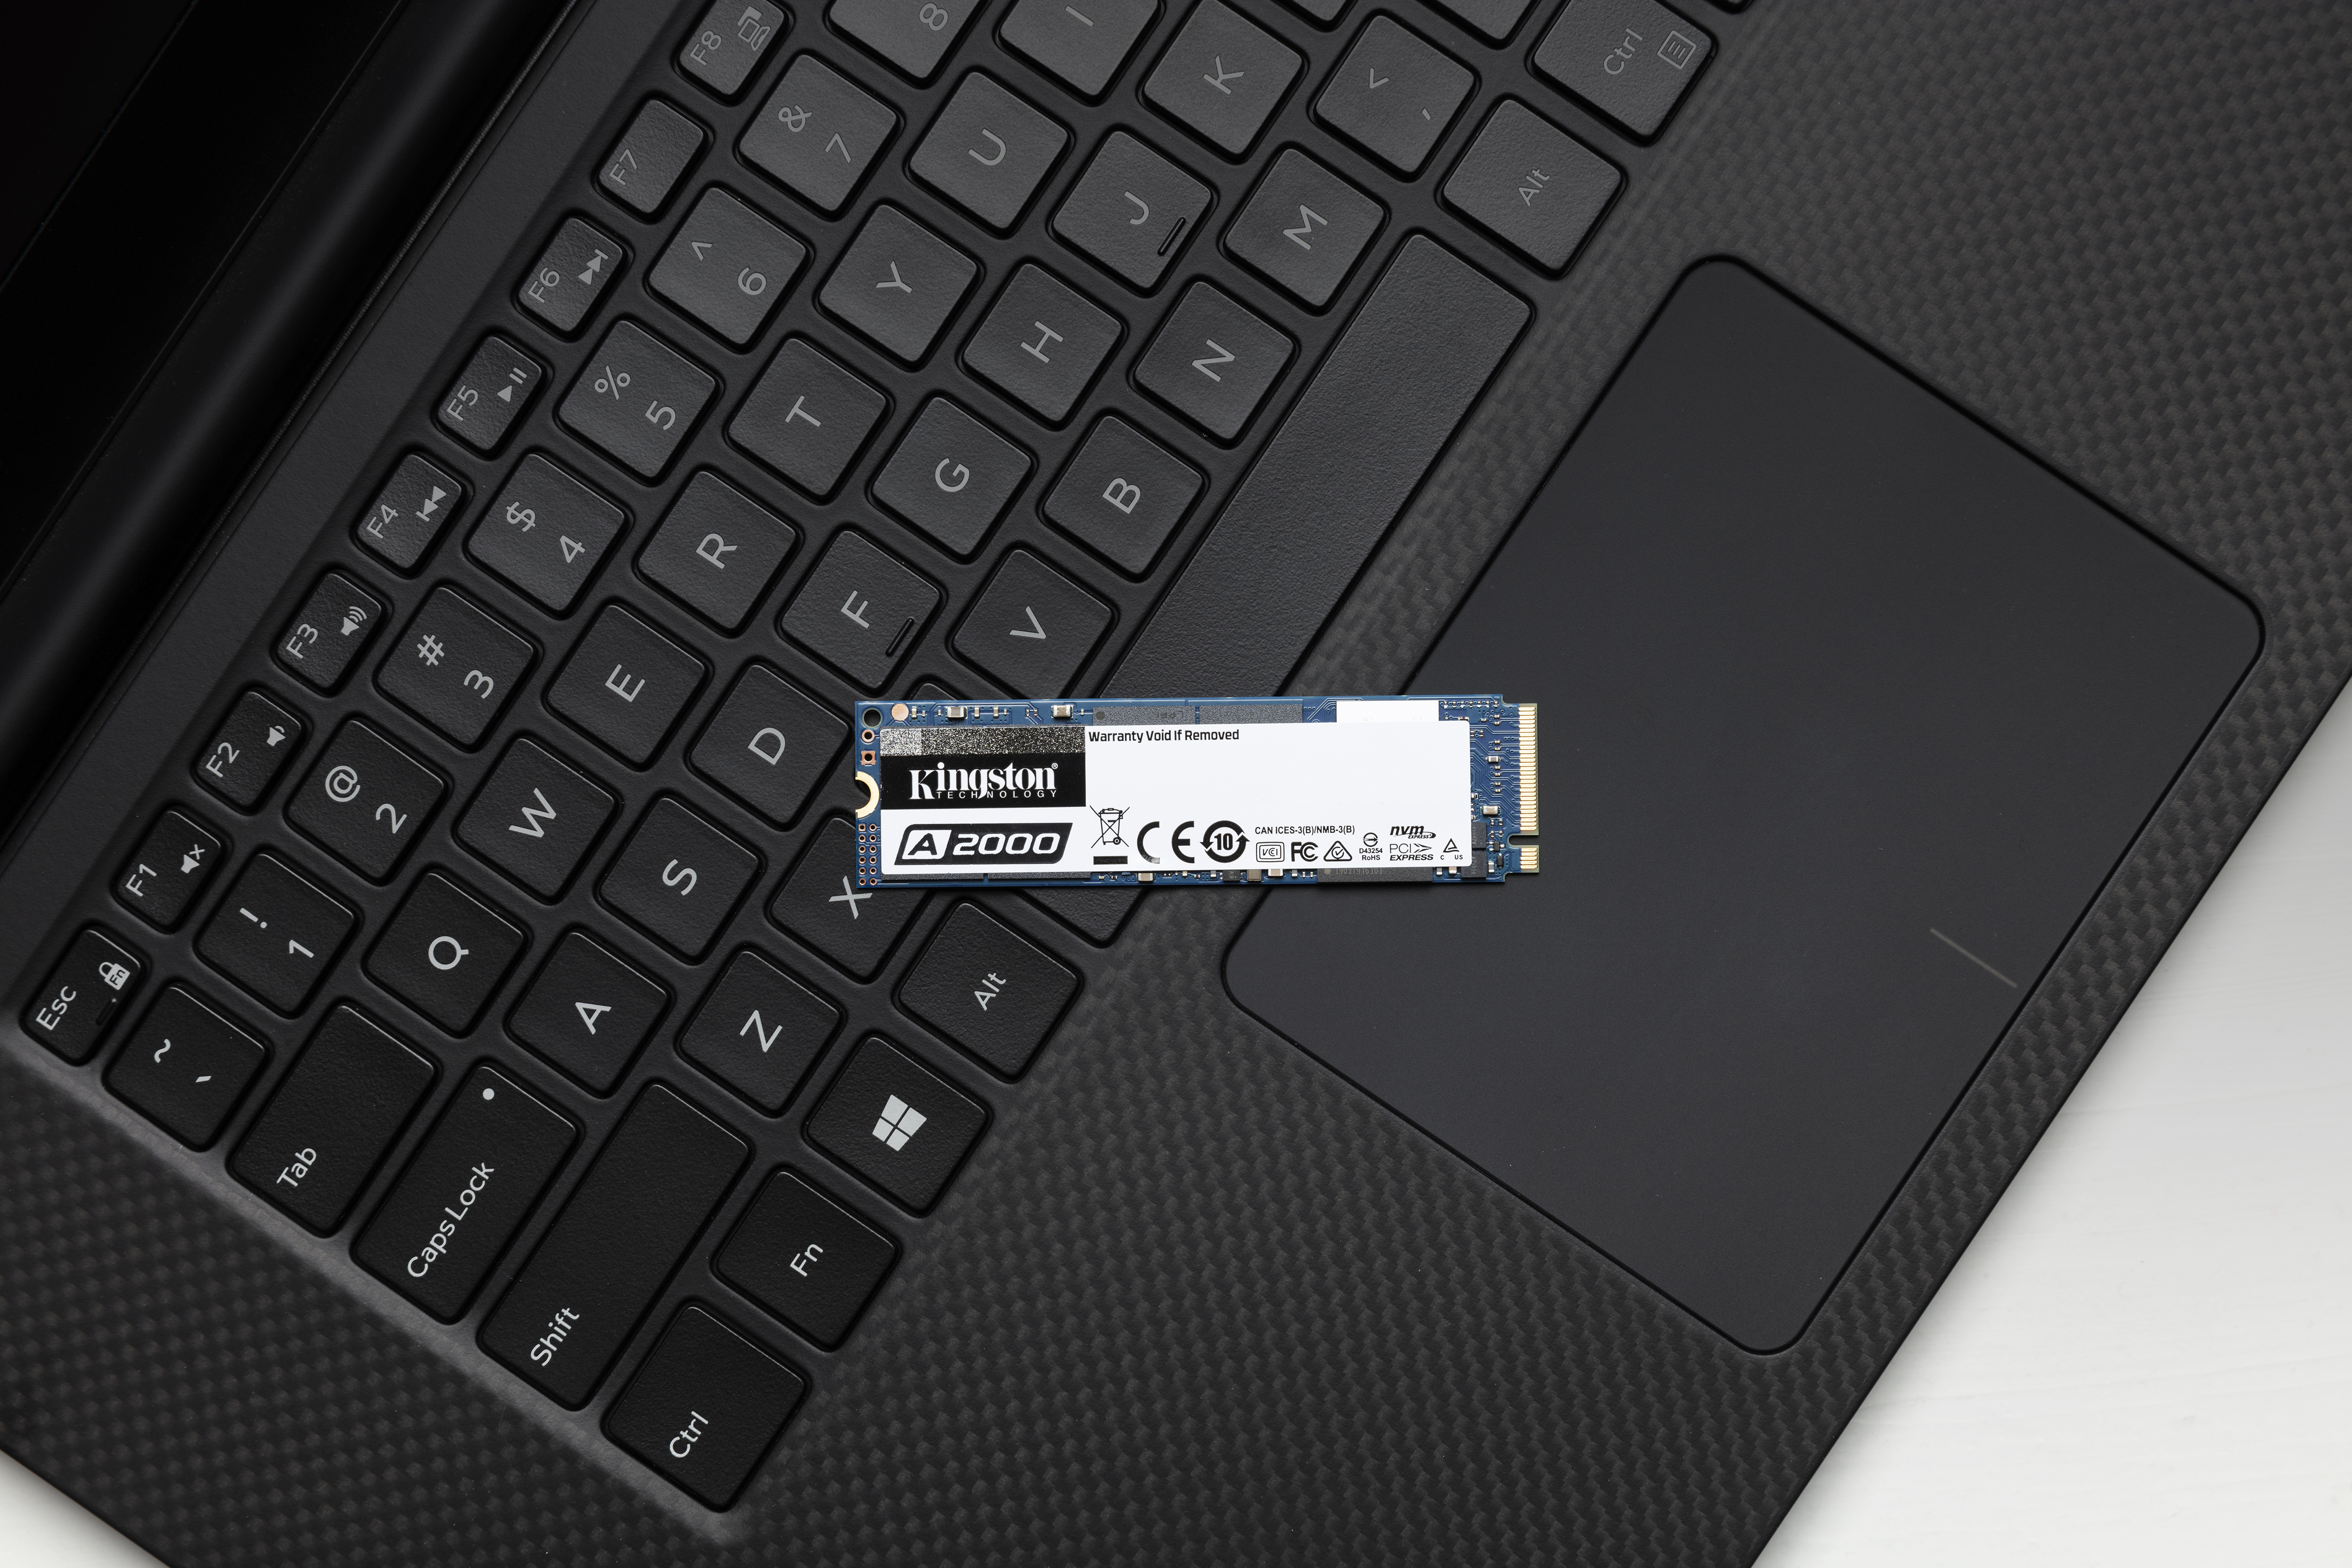 Kingston A2000 - SSD - verschlüsselt - 250 GB - intern - M.2 2280 - PCIe 3.0 x4 (NVMe)